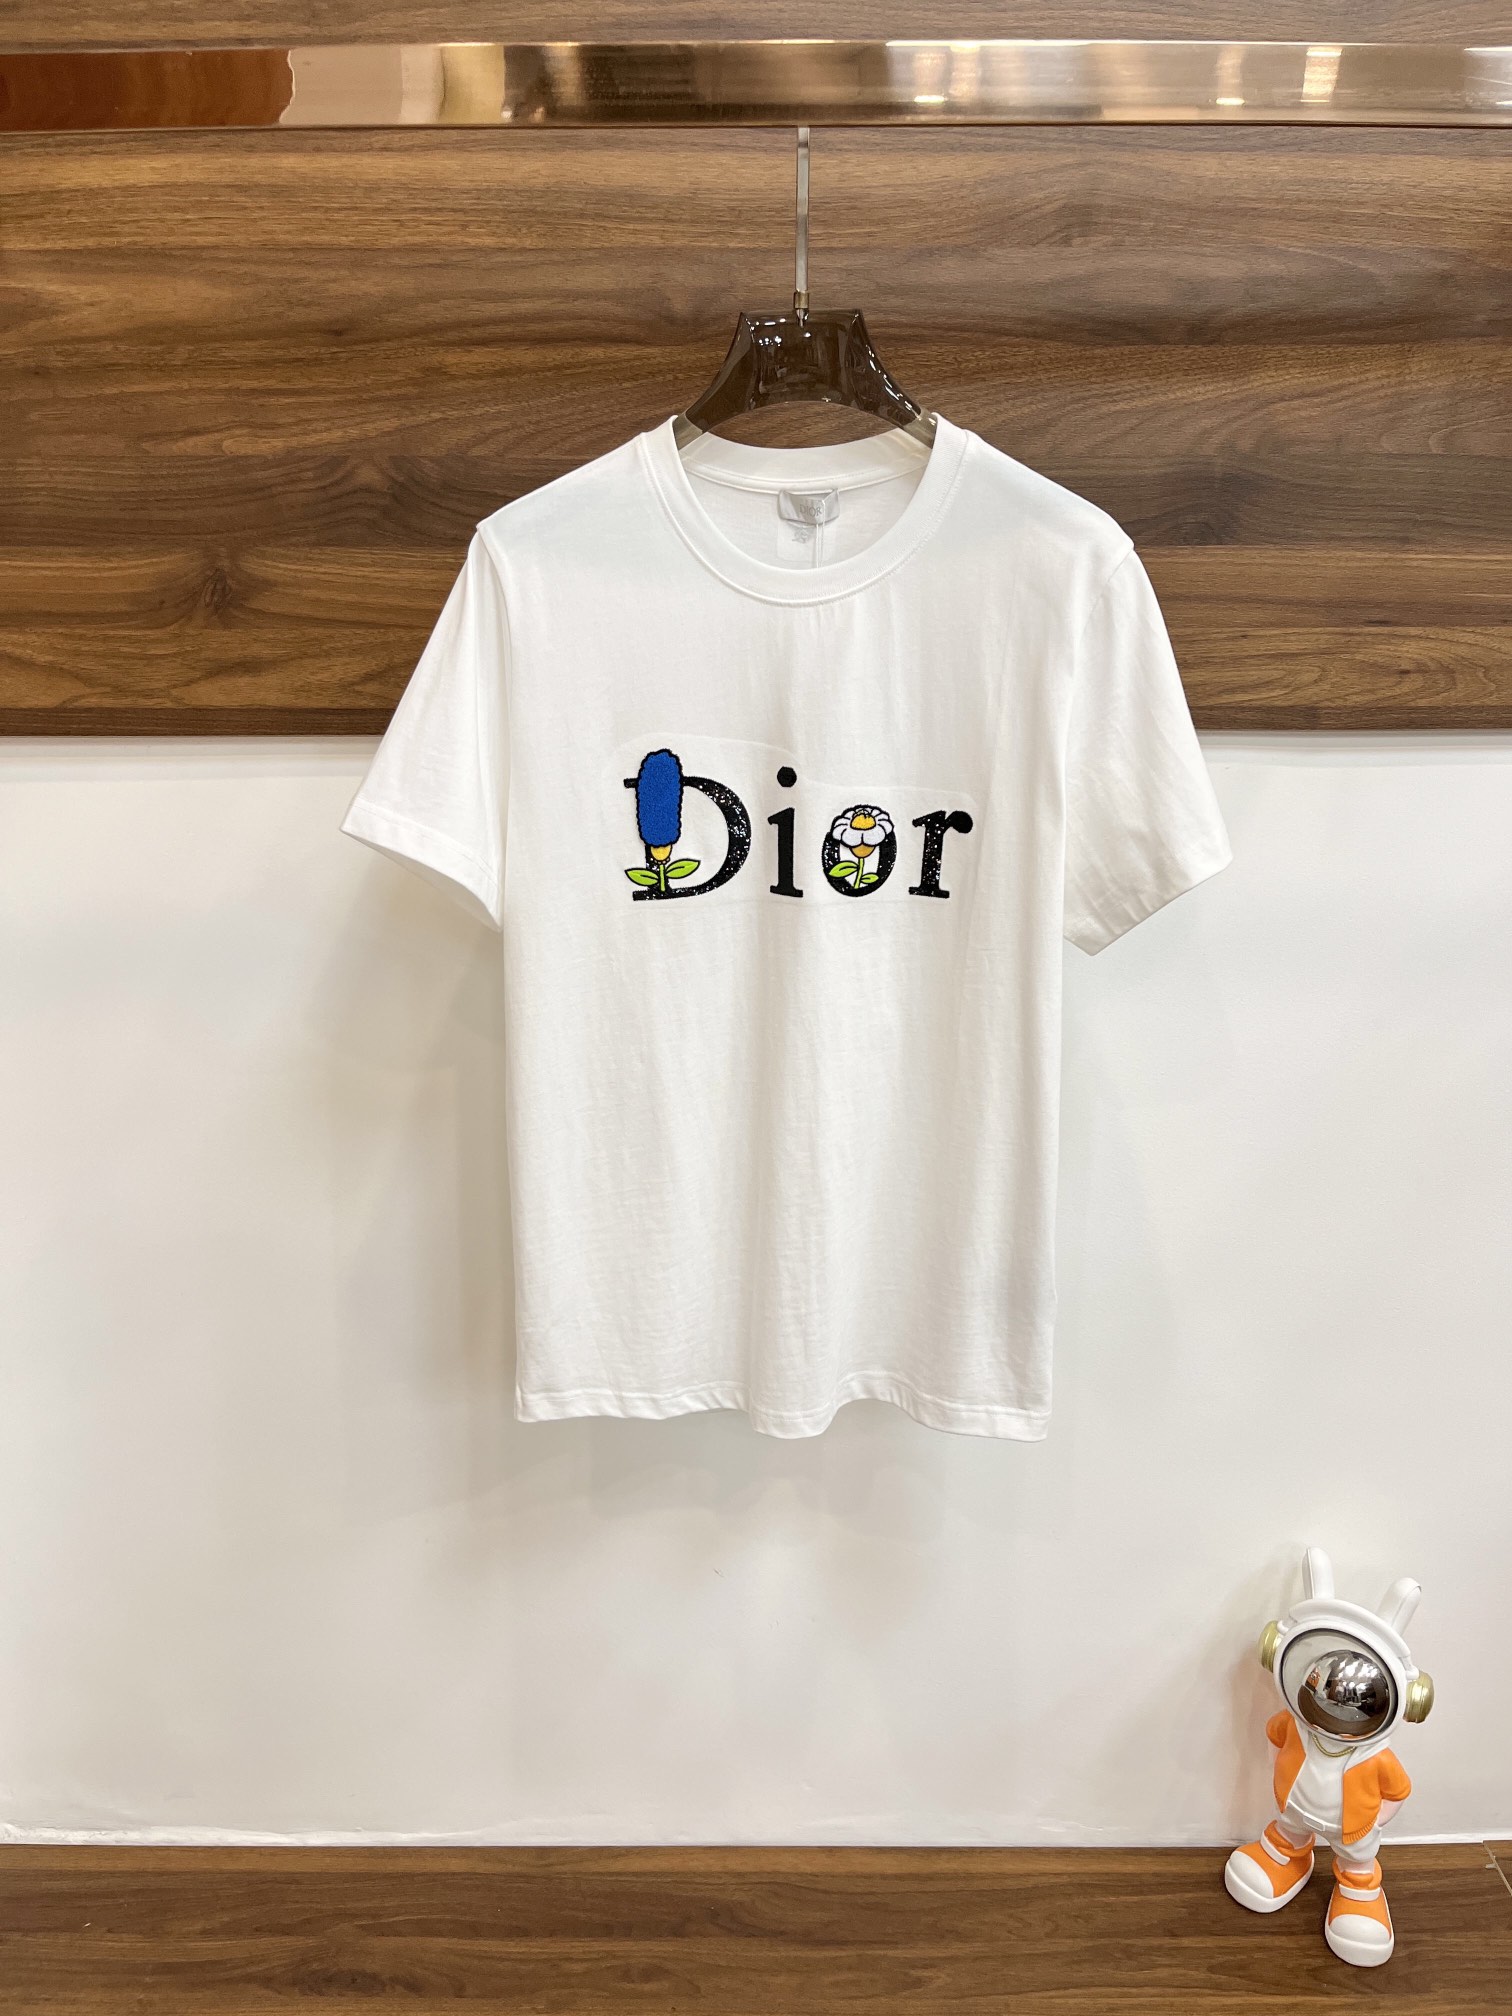 Dior Clothing T-Shirt Fashion Short Sleeve